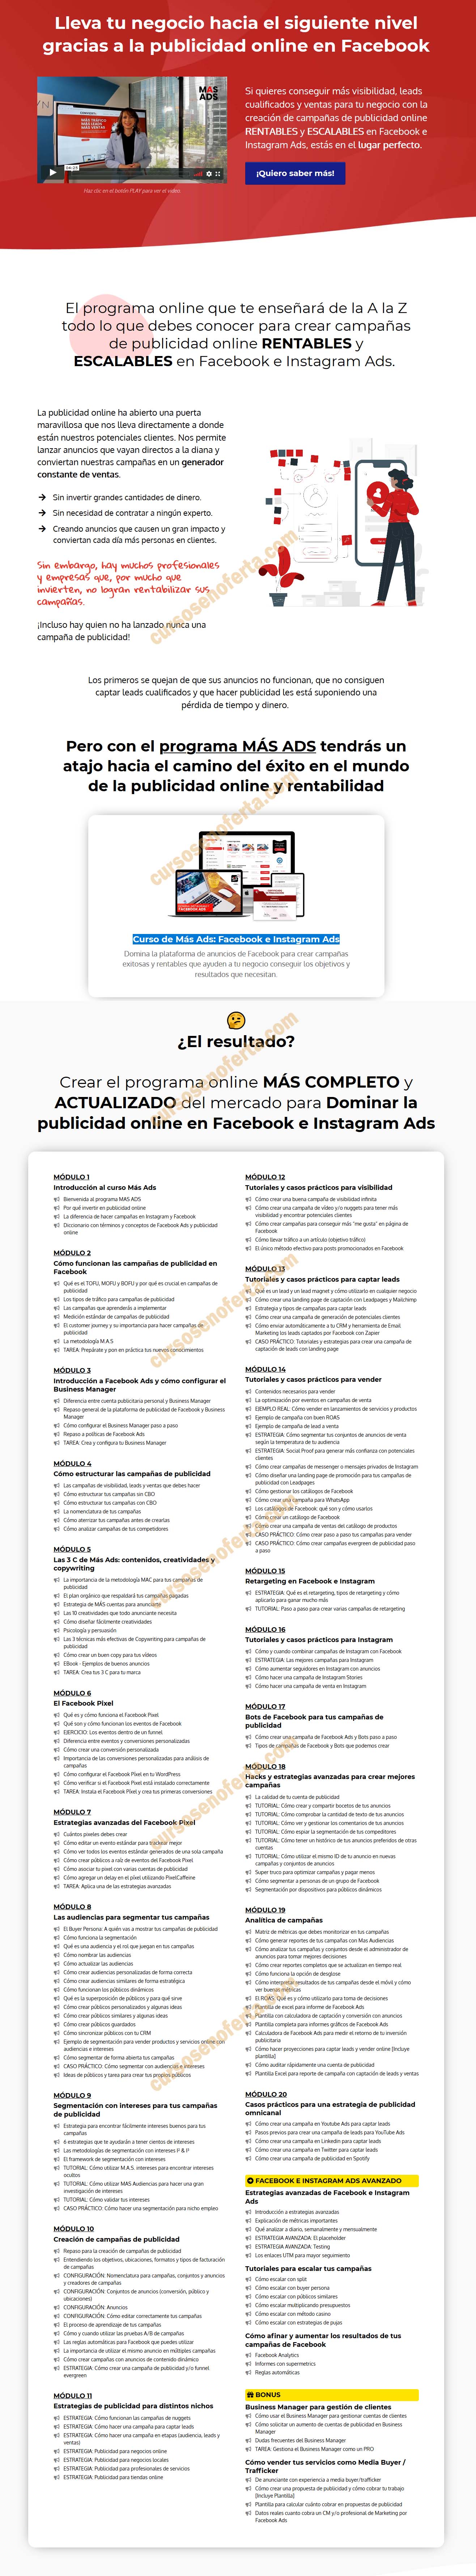 Curso de Más Ads. Facebook e Instagram Ads